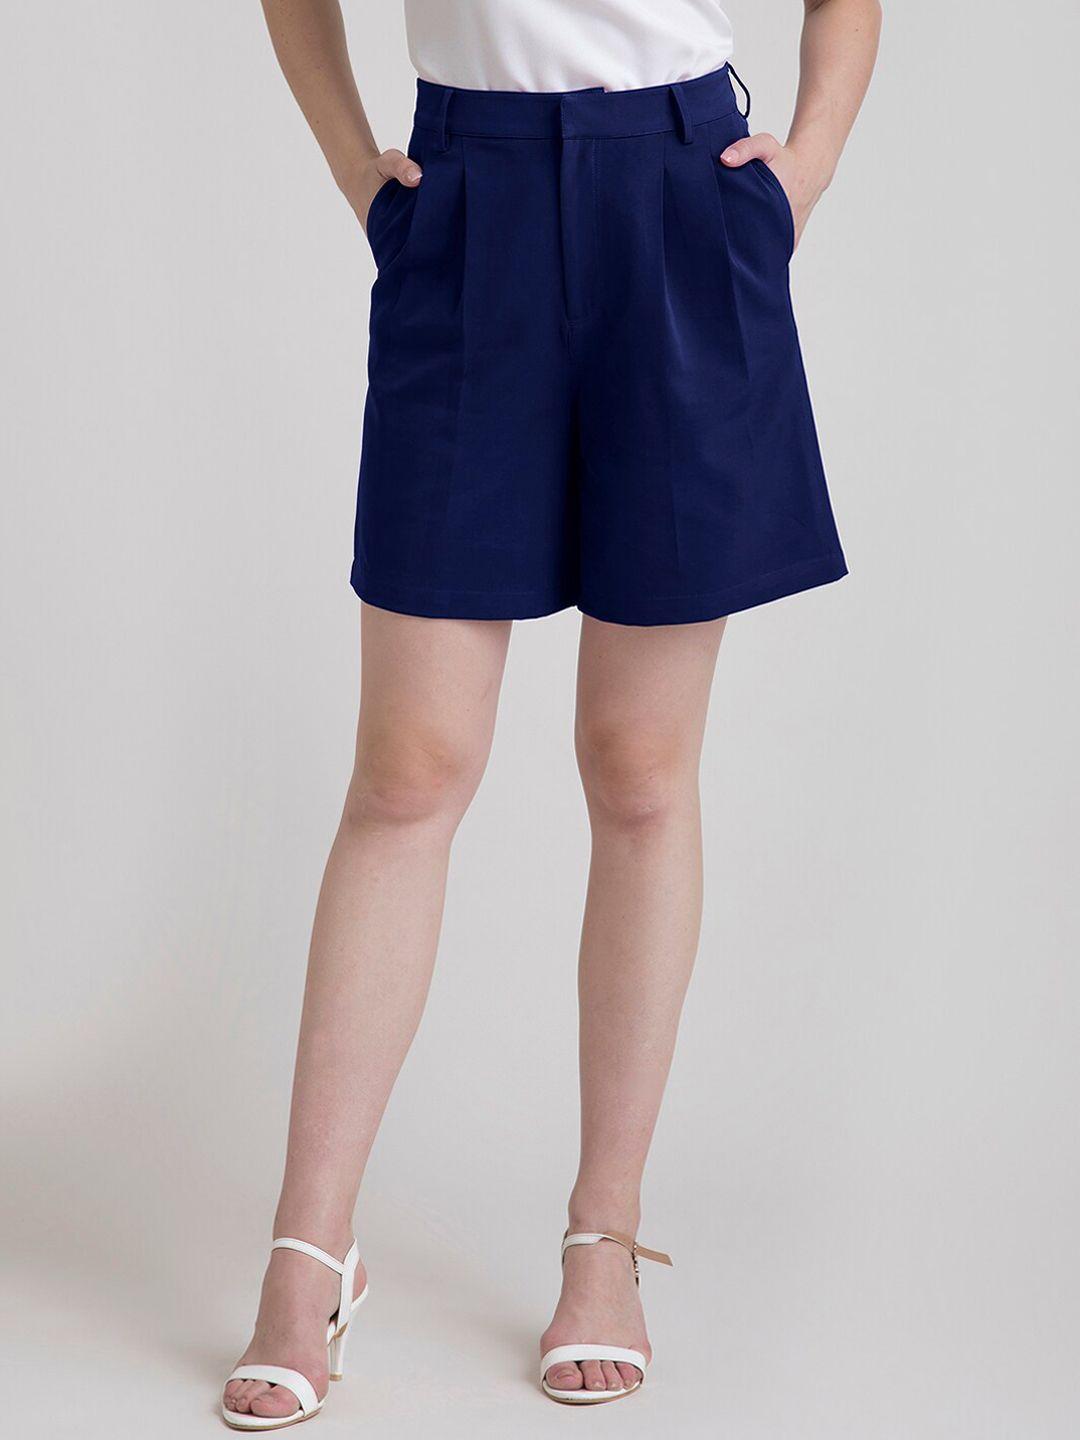 fablestreet women navy blue solid loose fit regular shorts